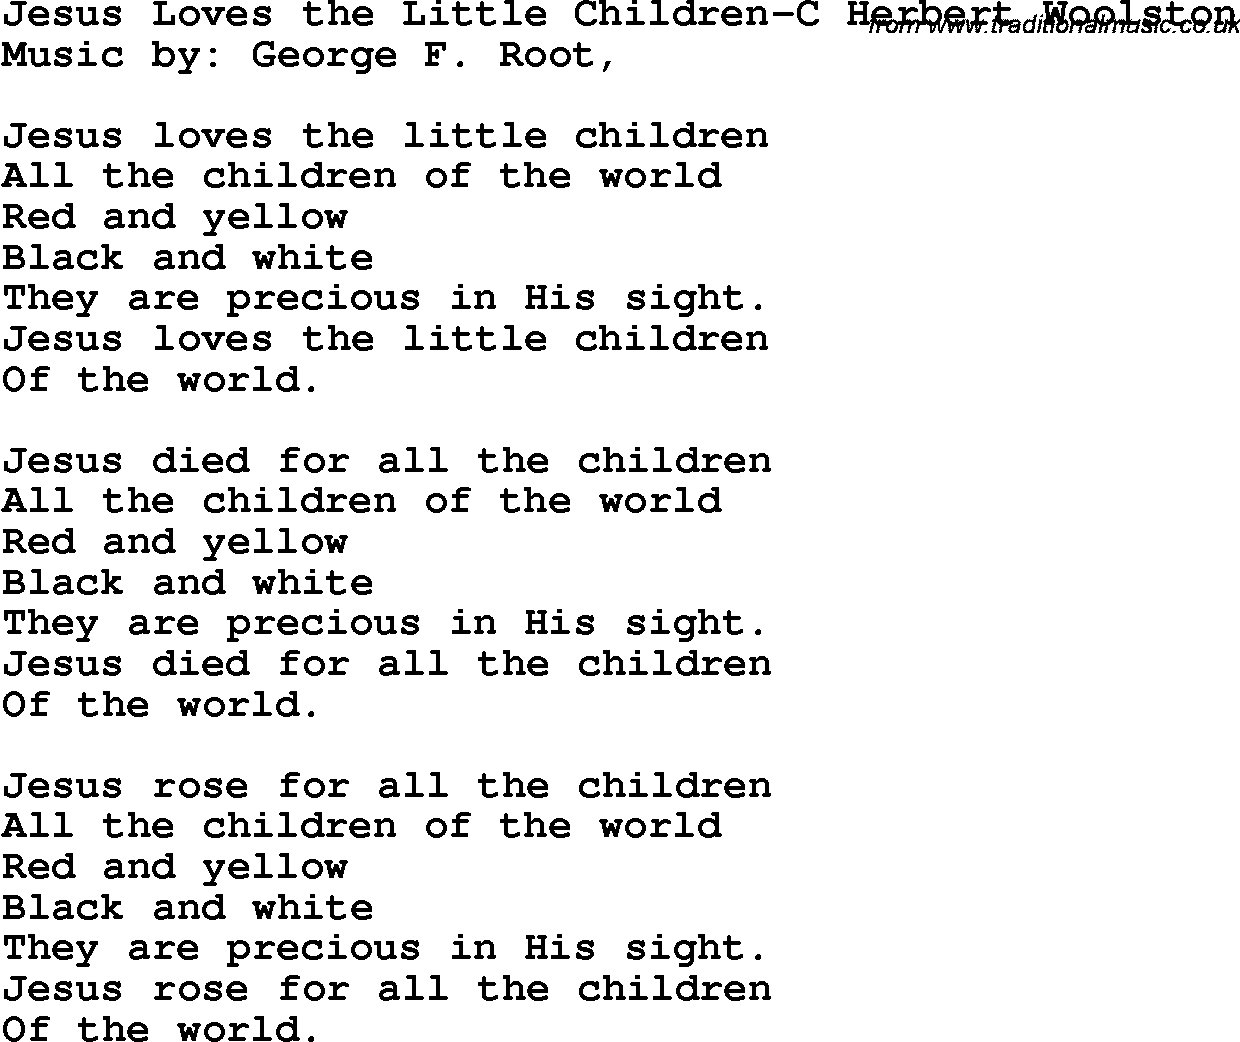 Download Jesus Loves The Little Children-C Herbert Woolston as PDF ...